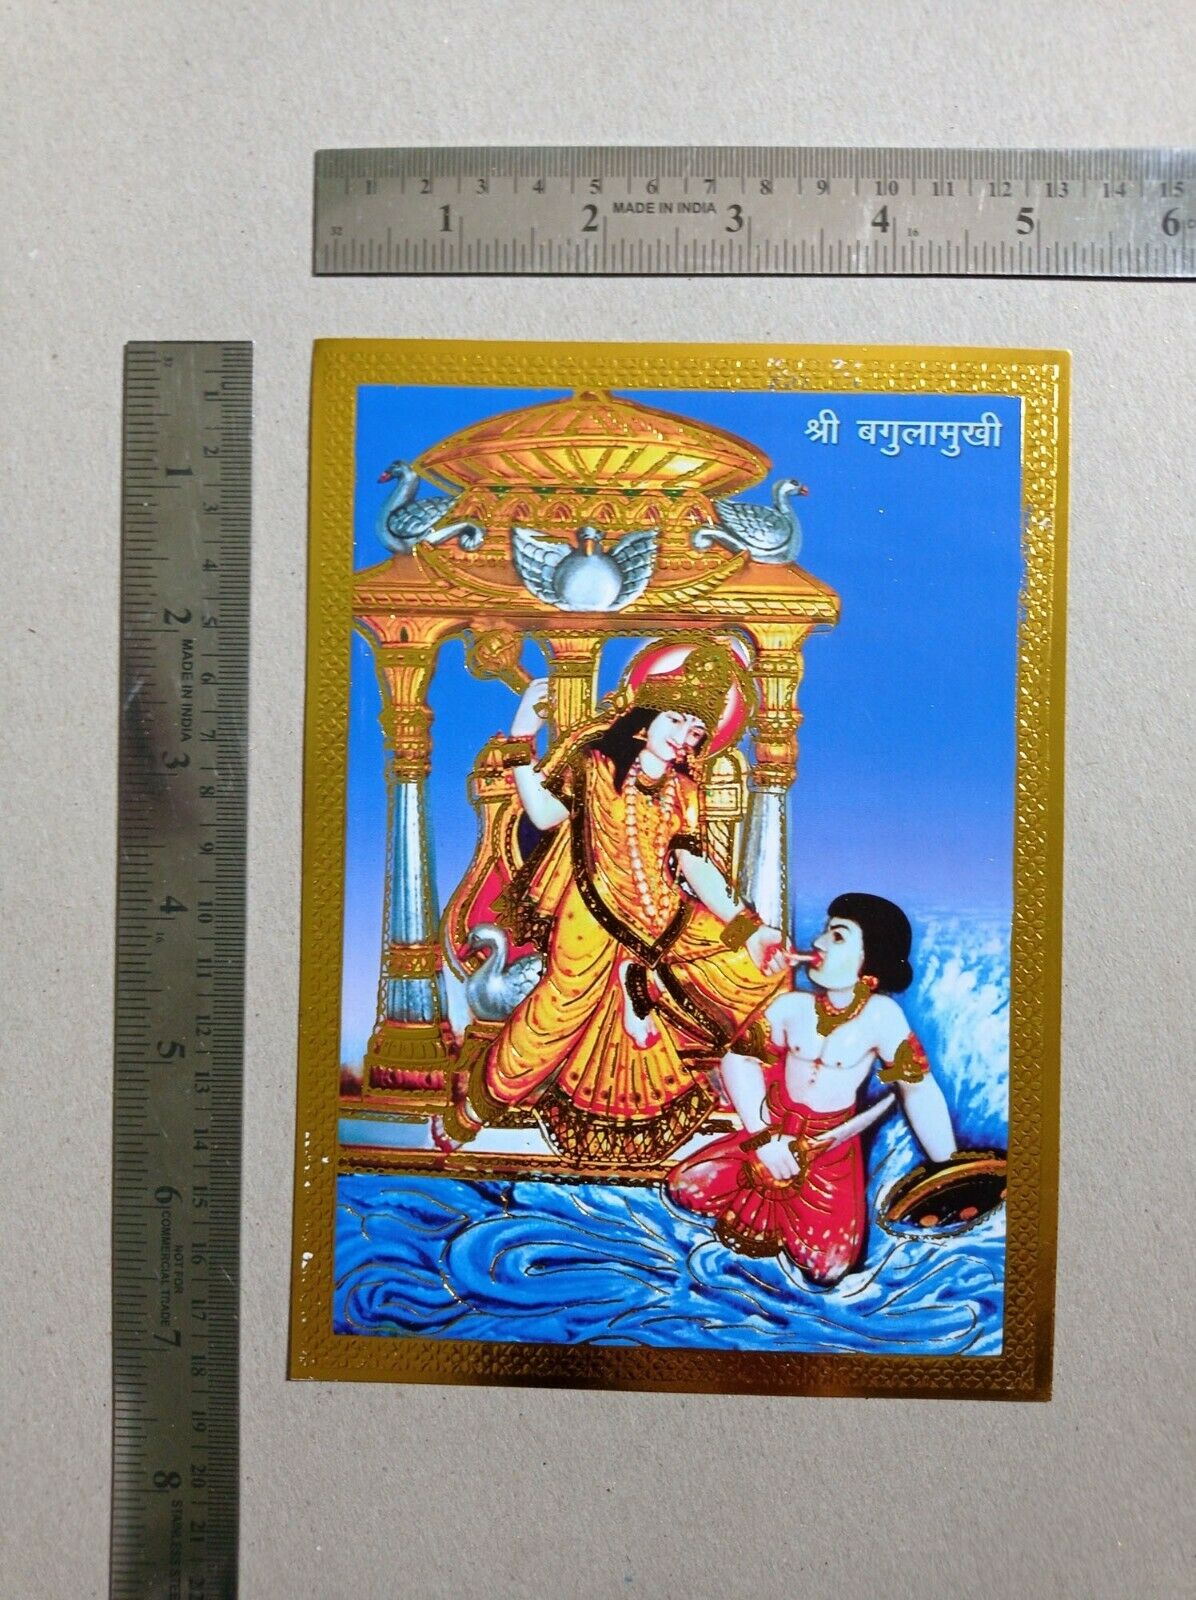 Shri Baglamukhi Mataji - Poster 5x7 Inch Golden Effect Paper